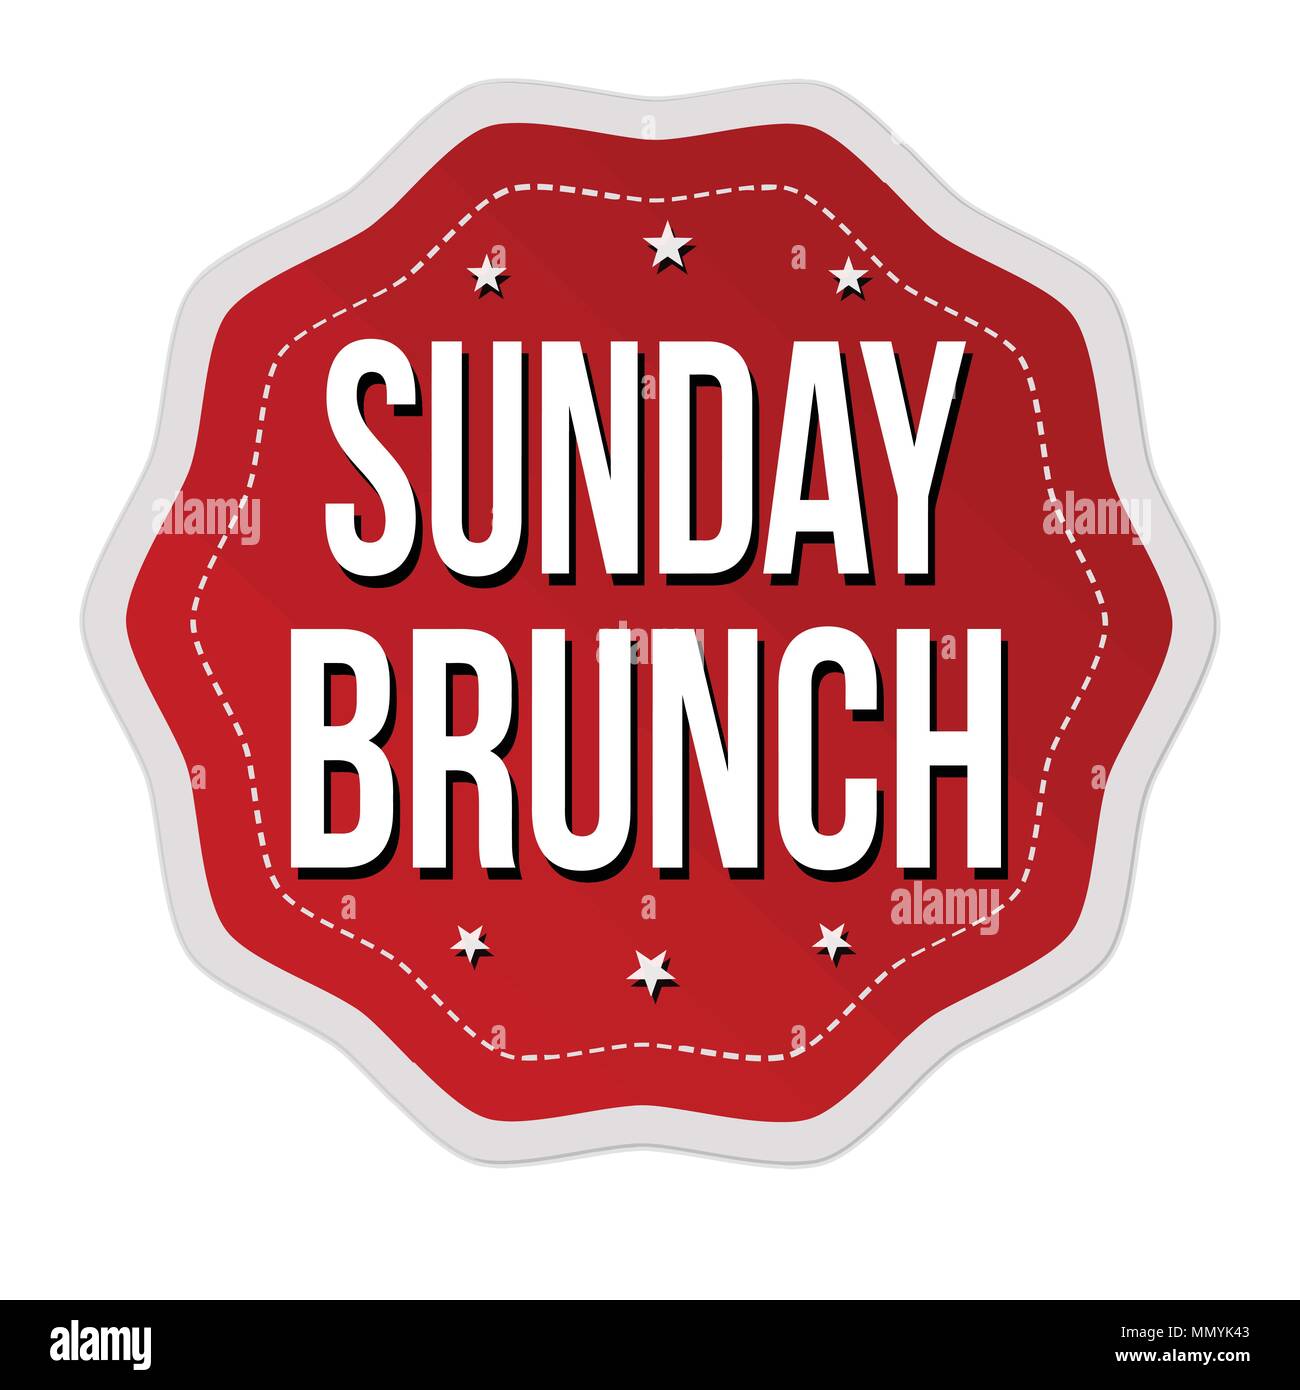 Sunday brunch label or sticker on white background, vector illustration Stock Vector